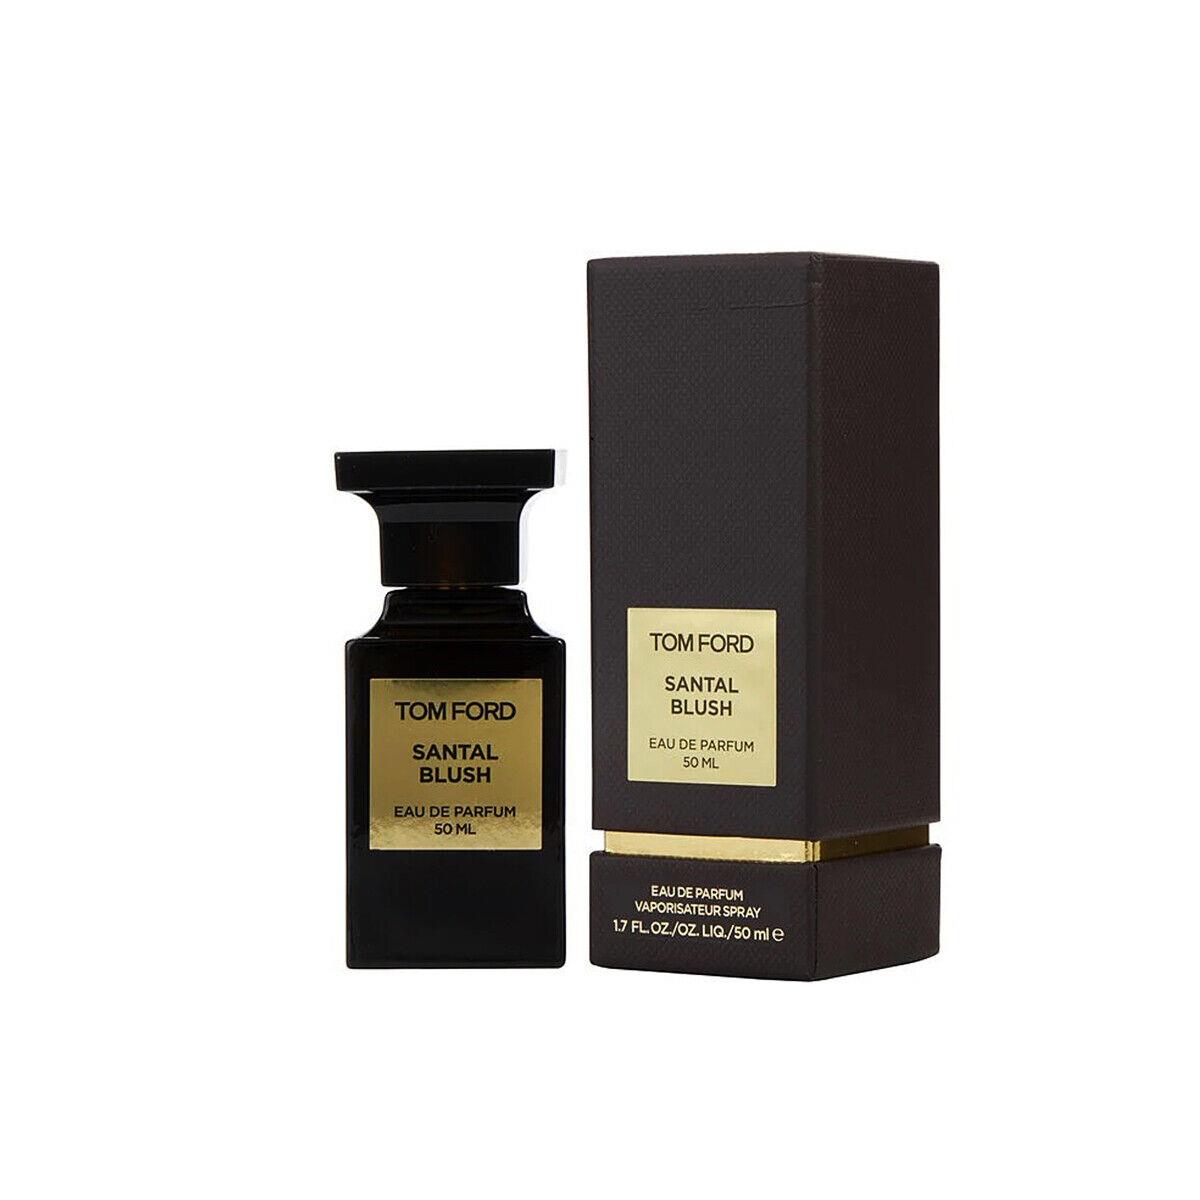 Tom Ford Santal Blush Eau De Parfum Spray - Size 1.7 Oz. / 50mL Box